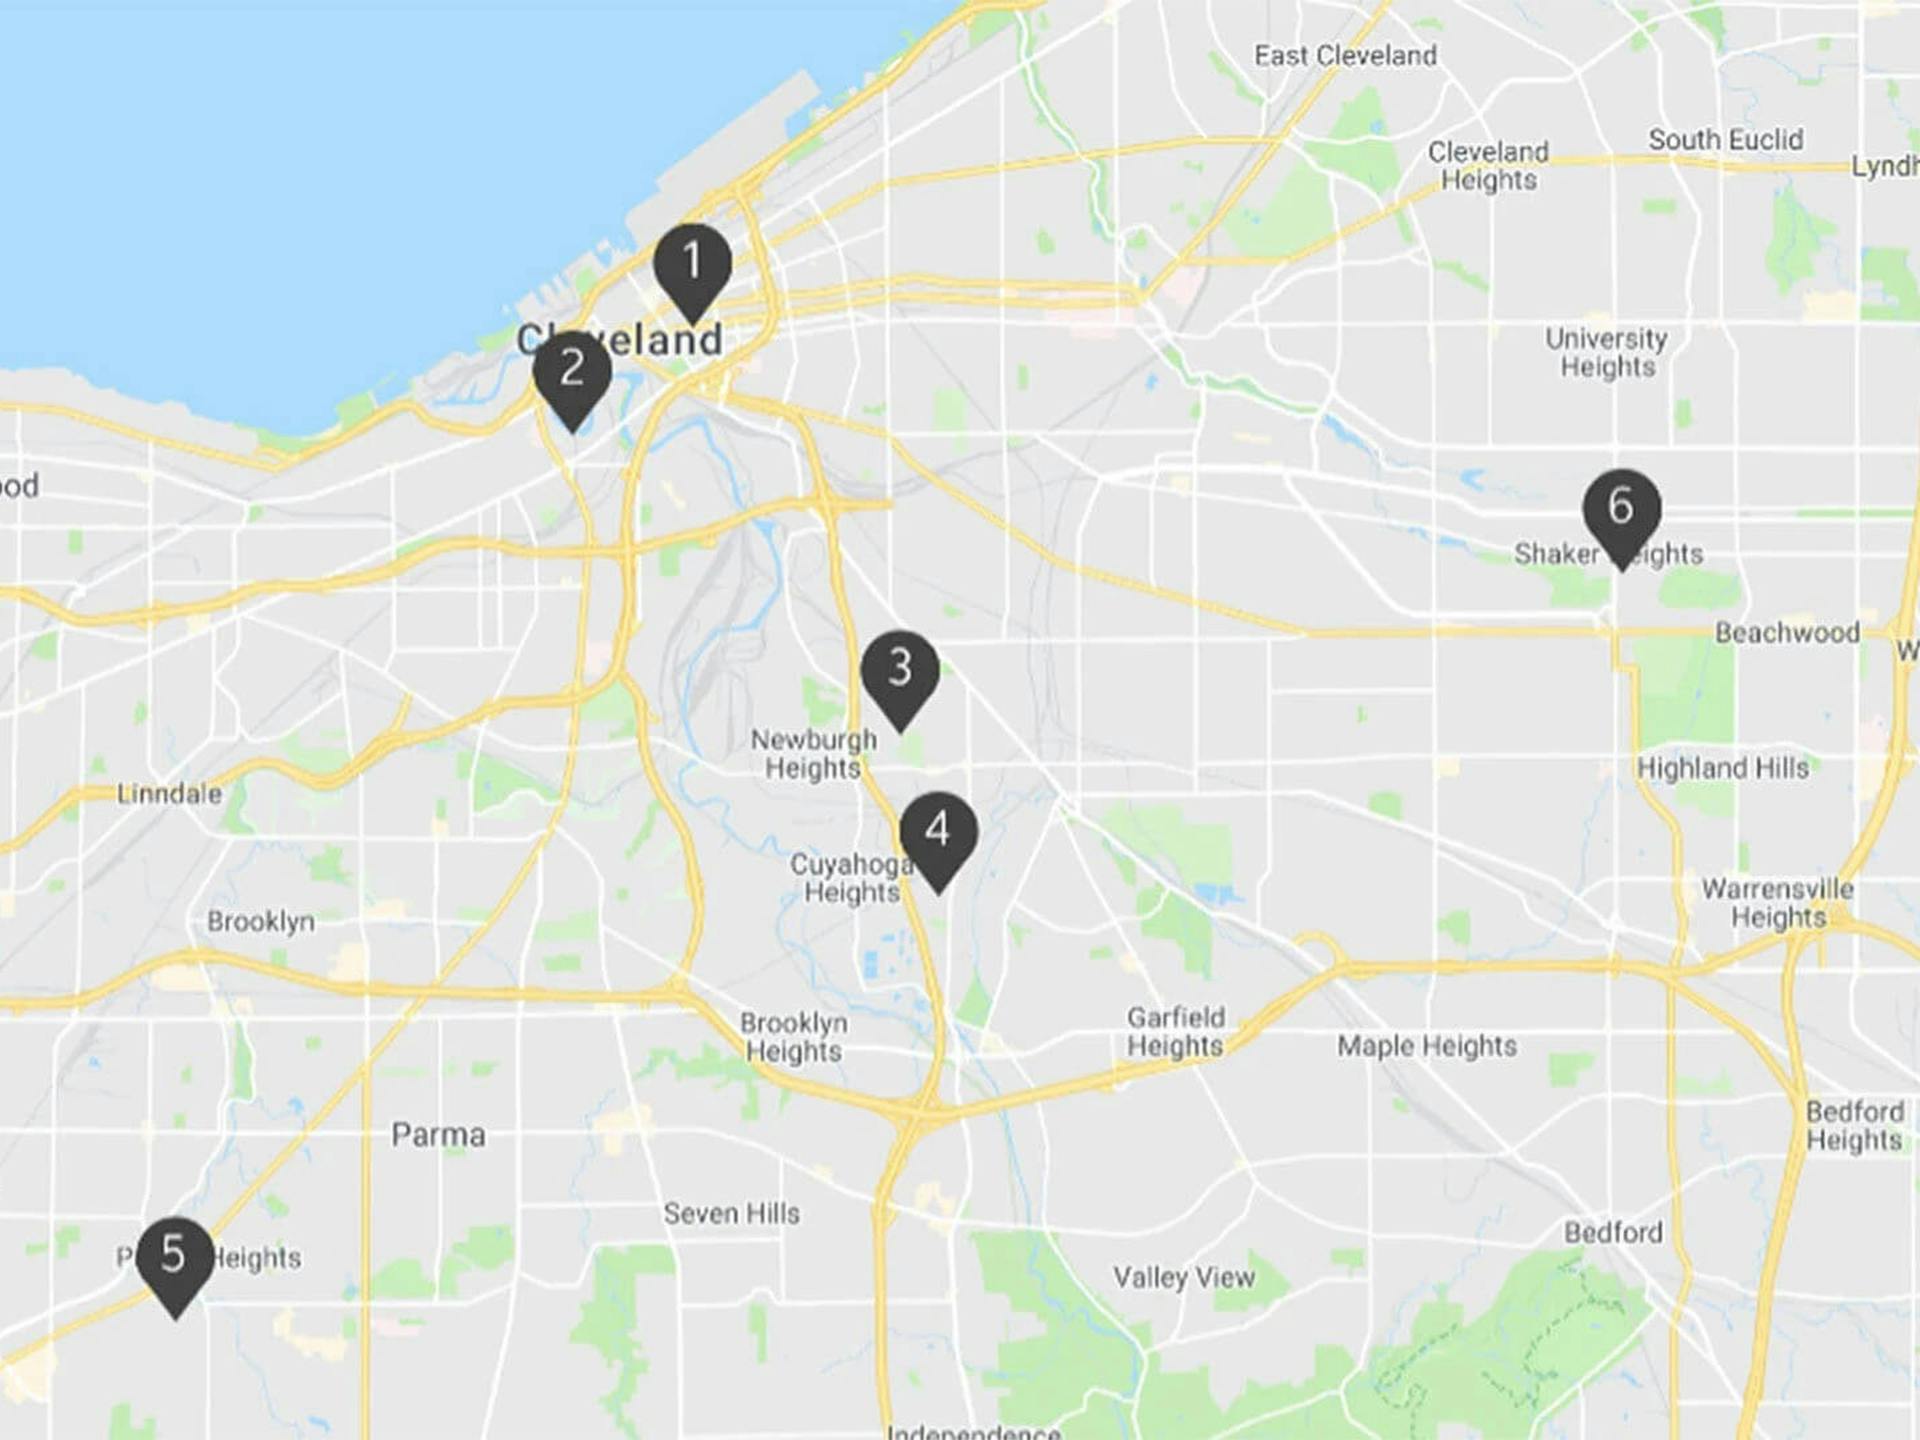 Google map image of locations near Cleveland, Ohio